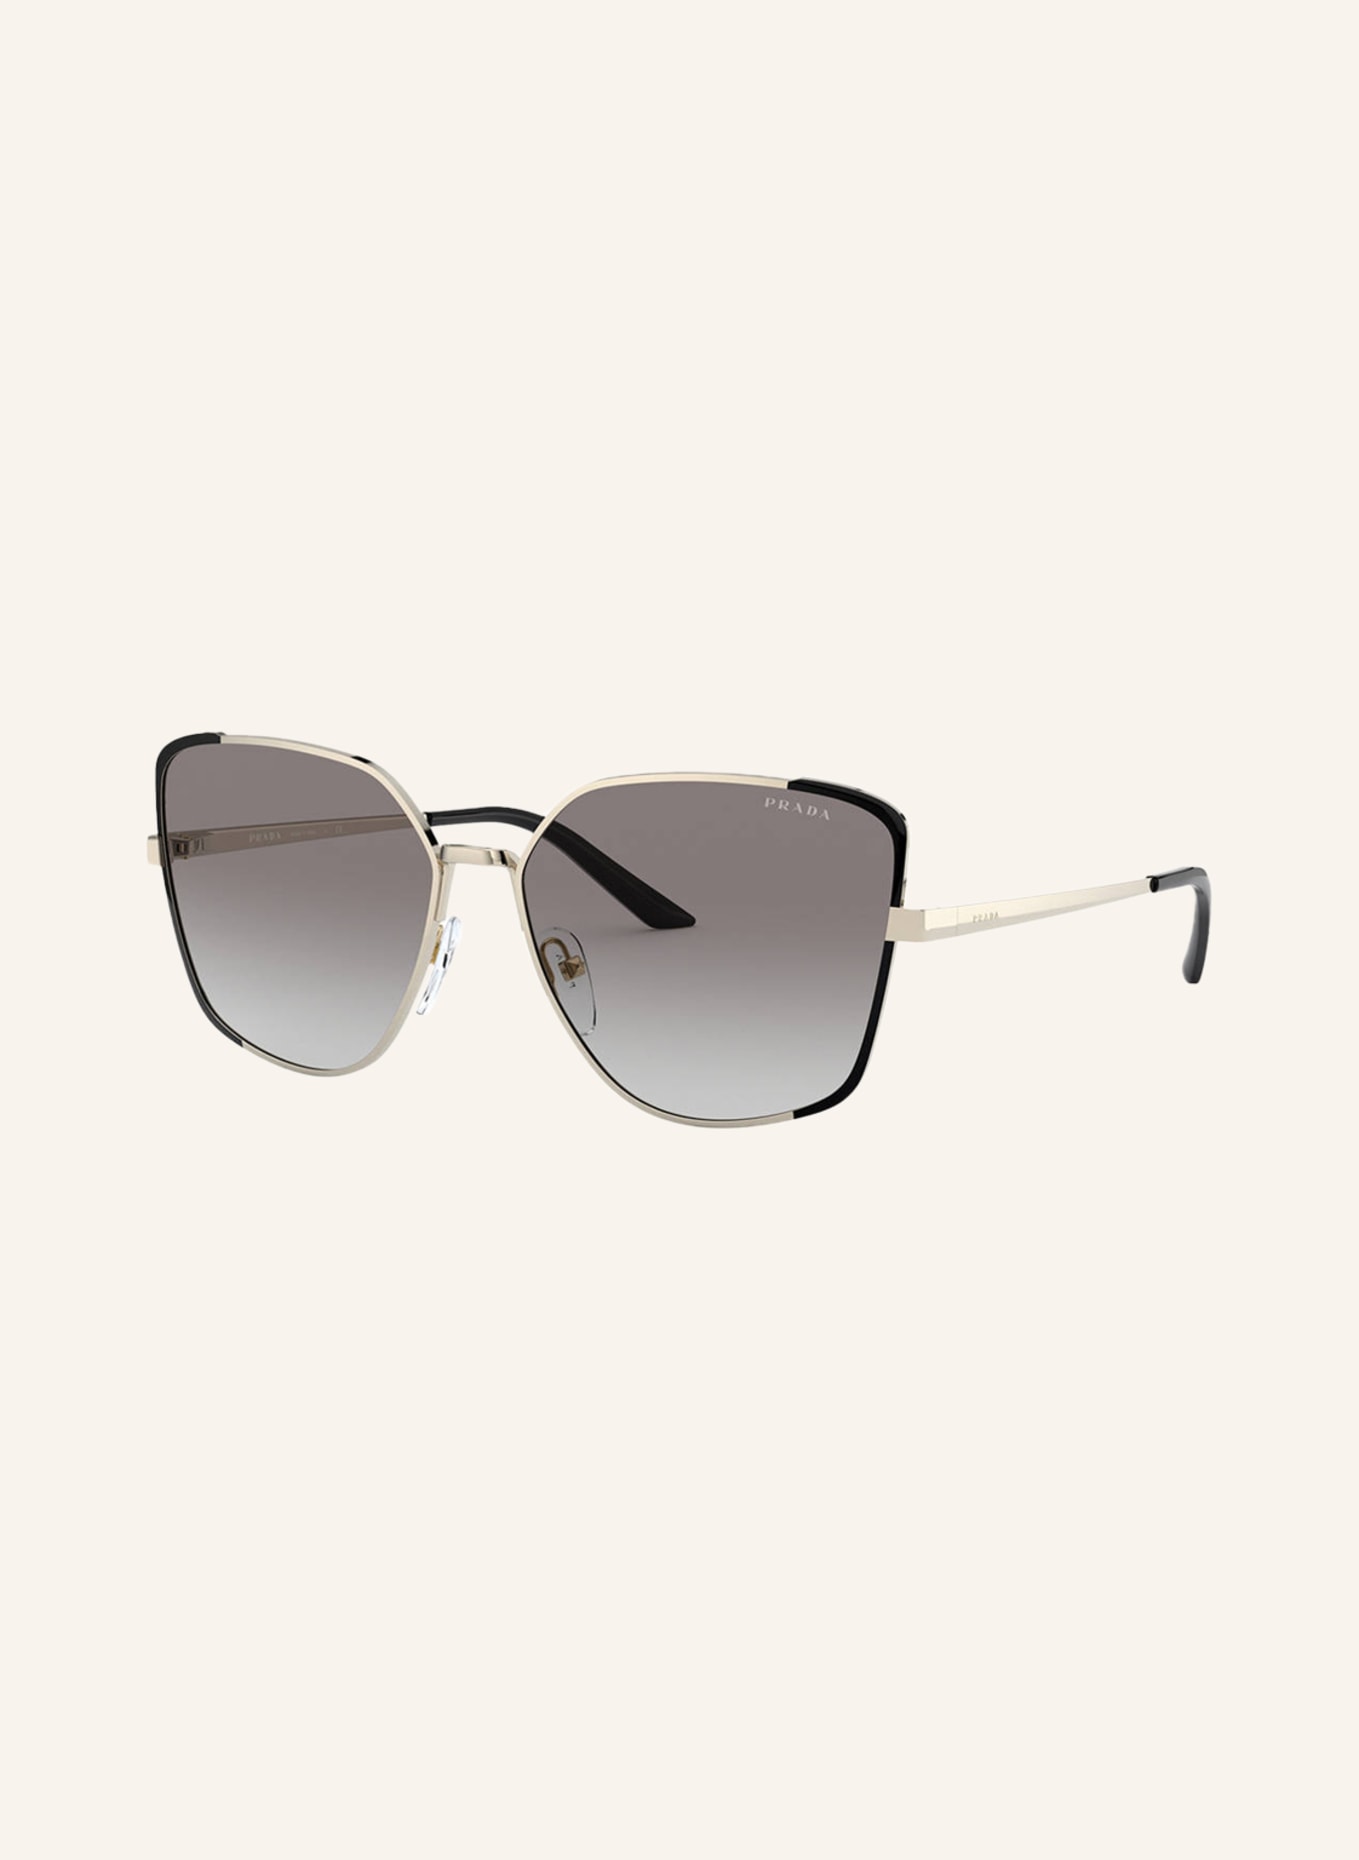 Prada sunglasses | Latest collections from top brands | ZALANDO-mncb.edu.vn